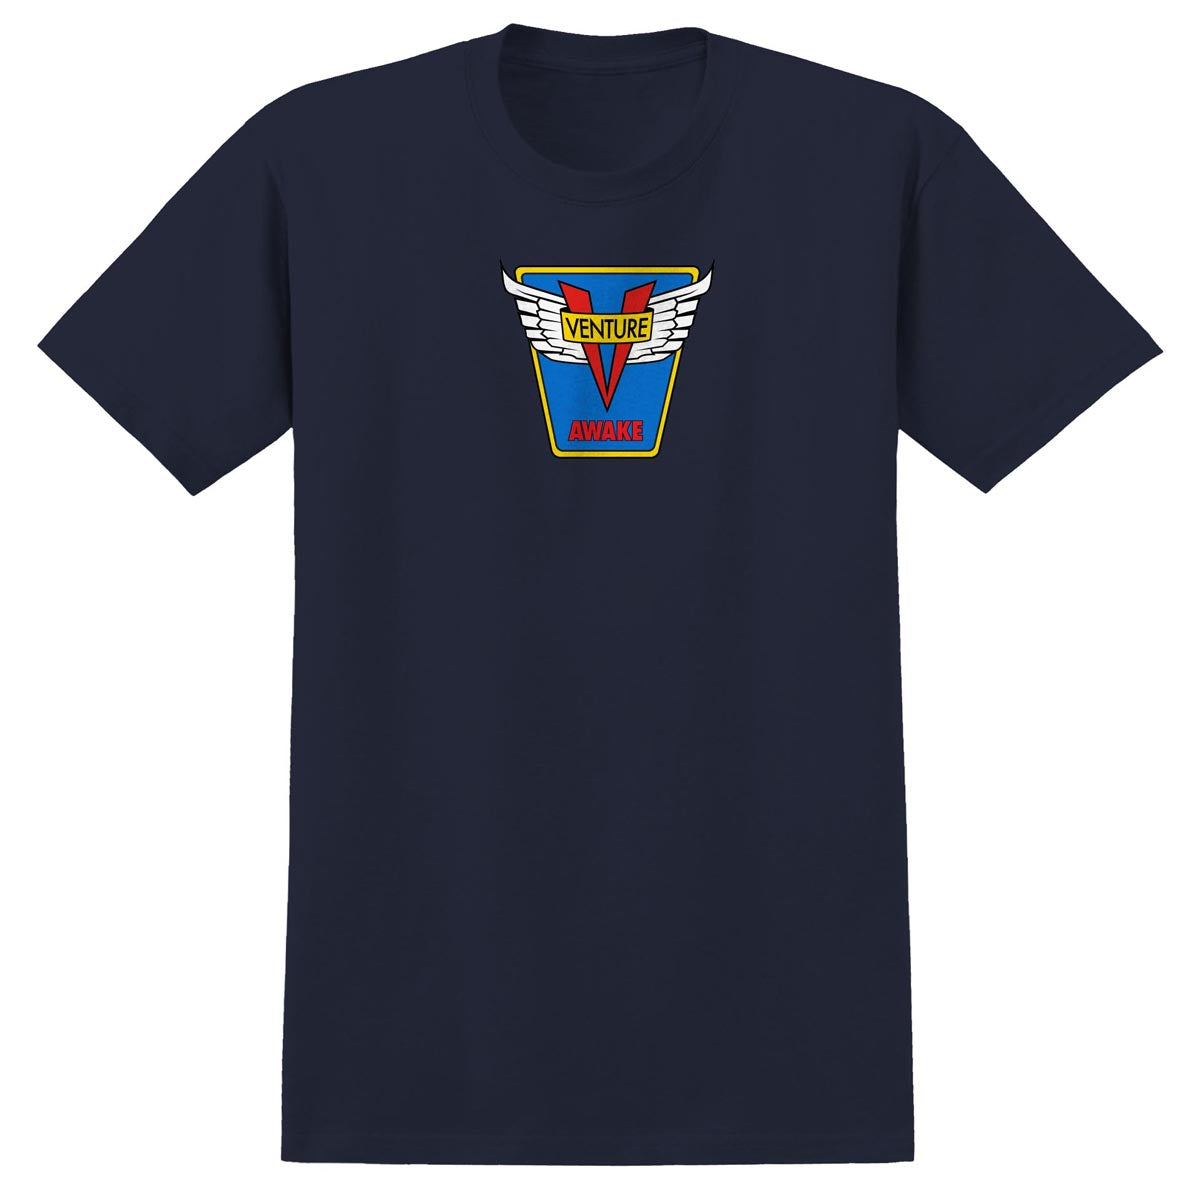 Venture Emblem T-Shirt - Navy/Blue/Yellow/Red image 1